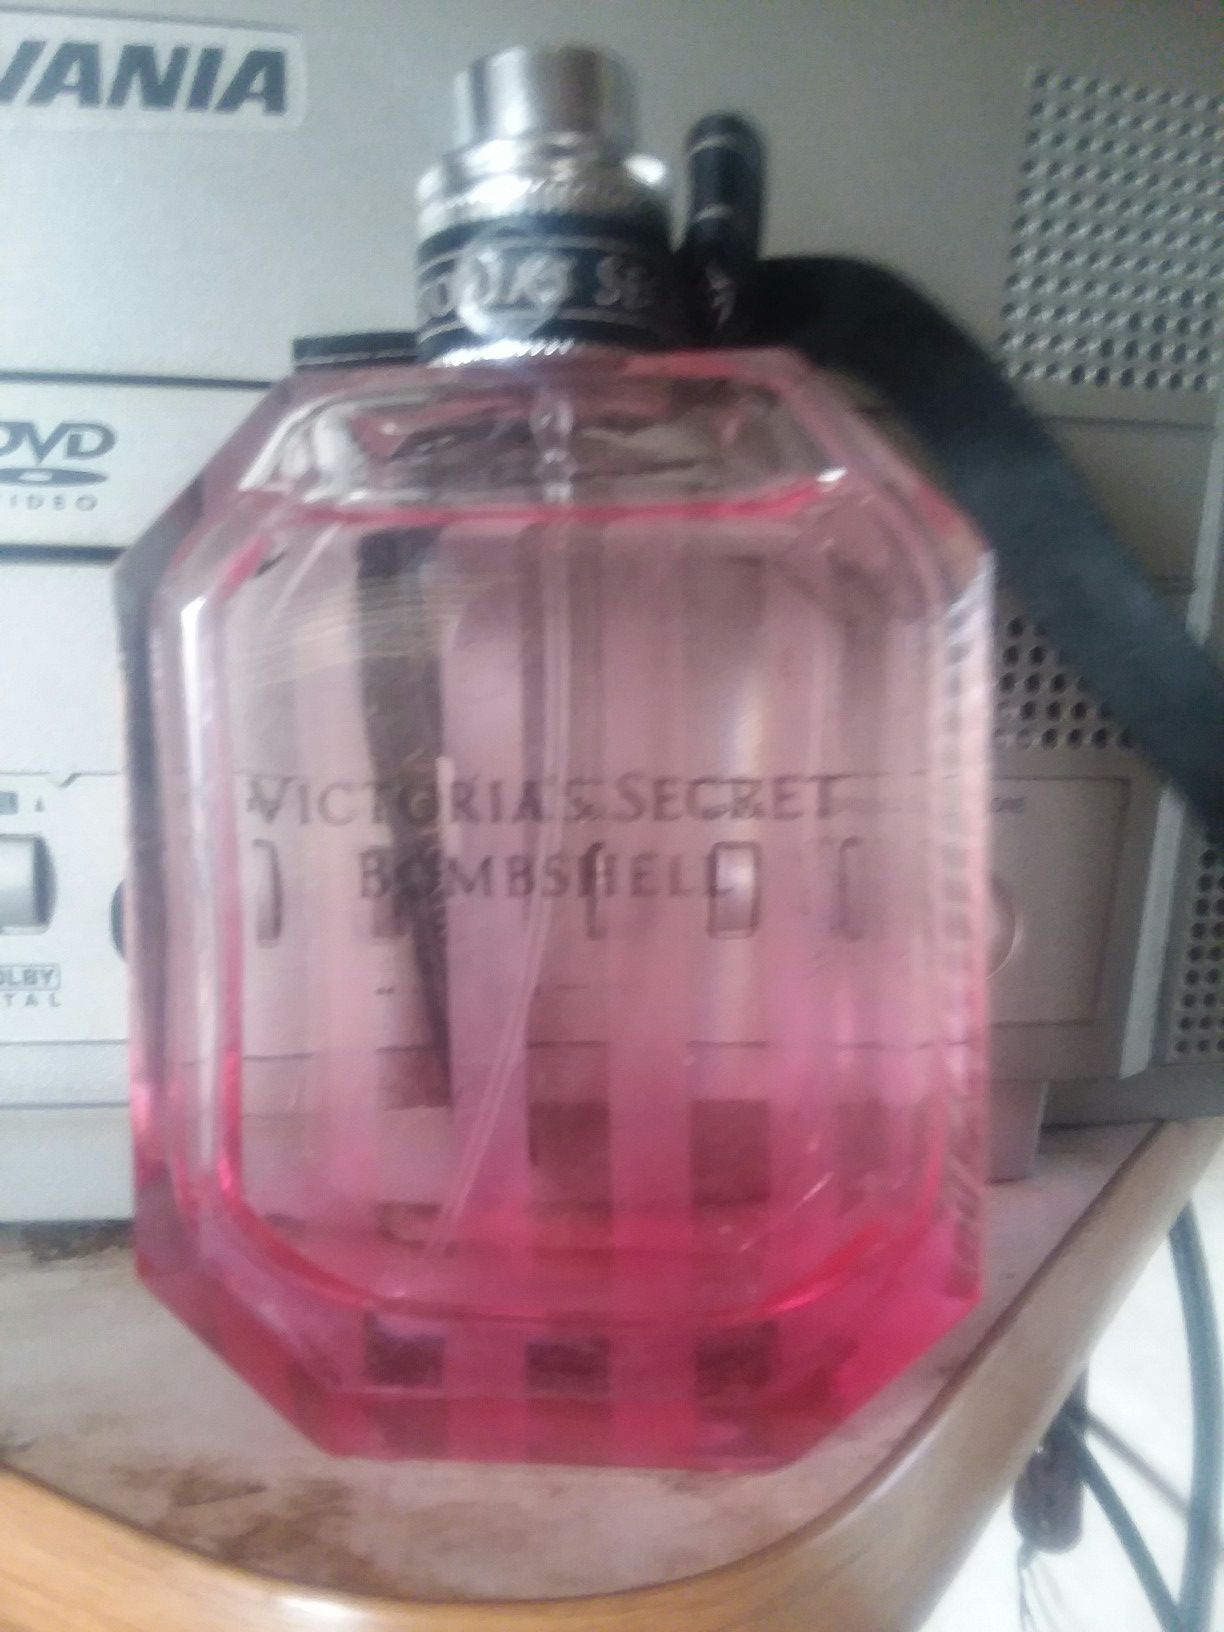 VICTORIA SECRET bombshell perfume